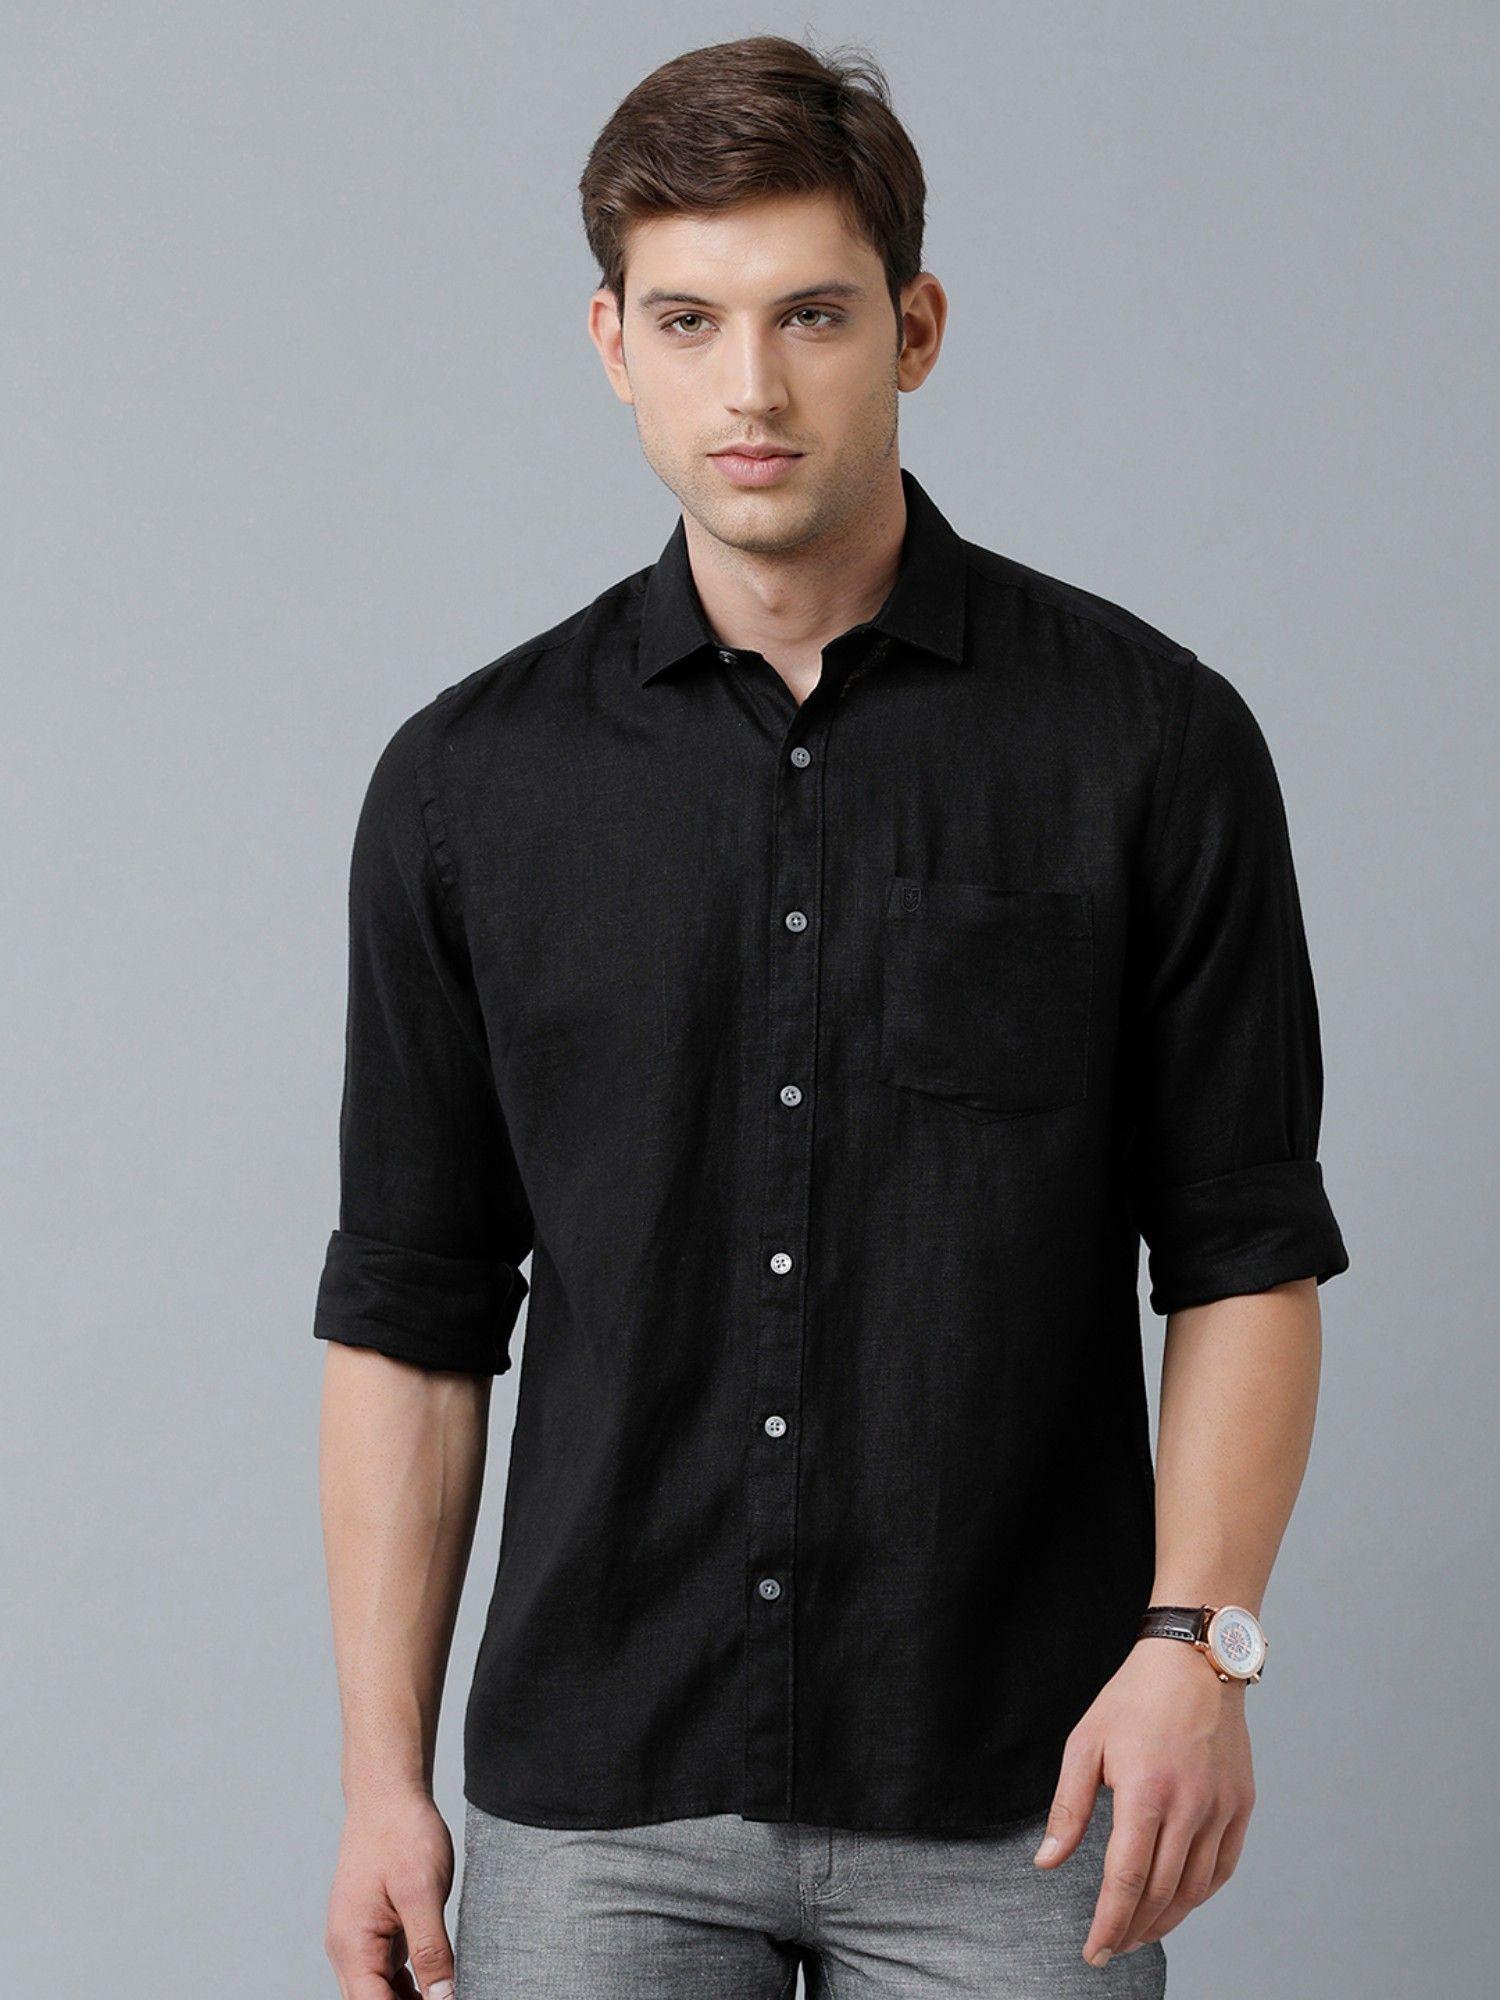 men's pure linen black solid regular fit full sleeve casual shirt